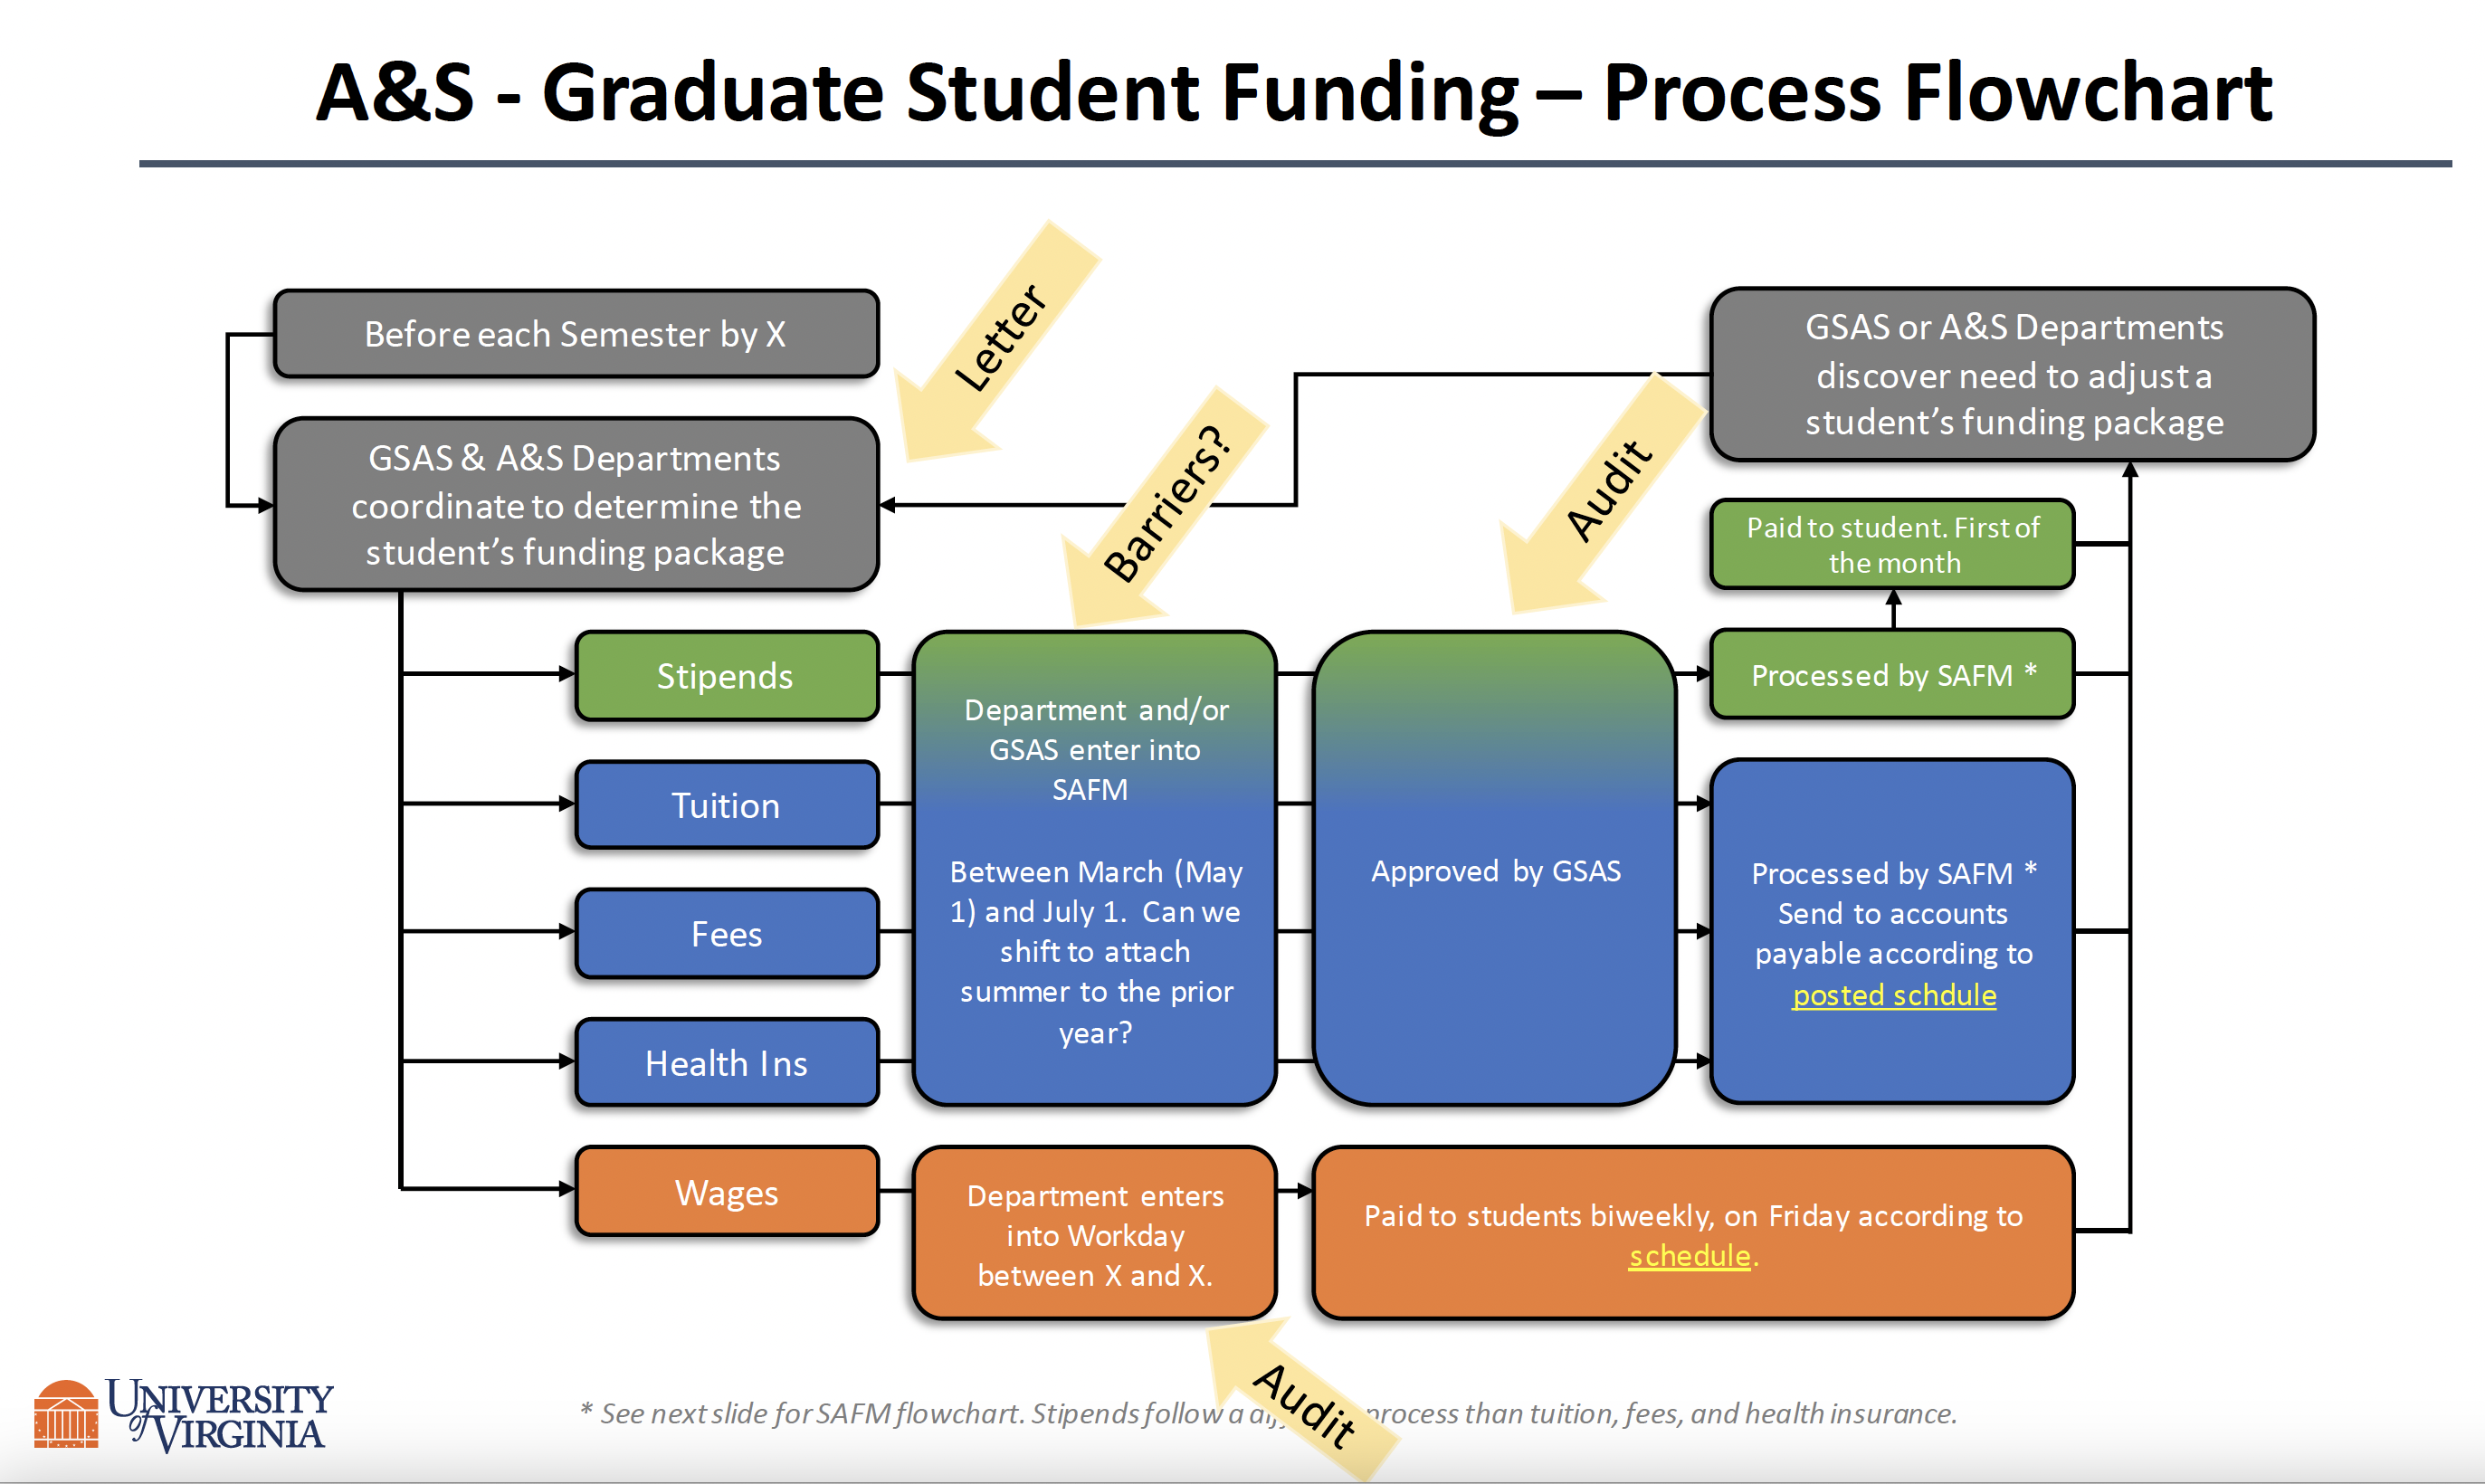 A&S Graduate Student Funding Process Flowchart